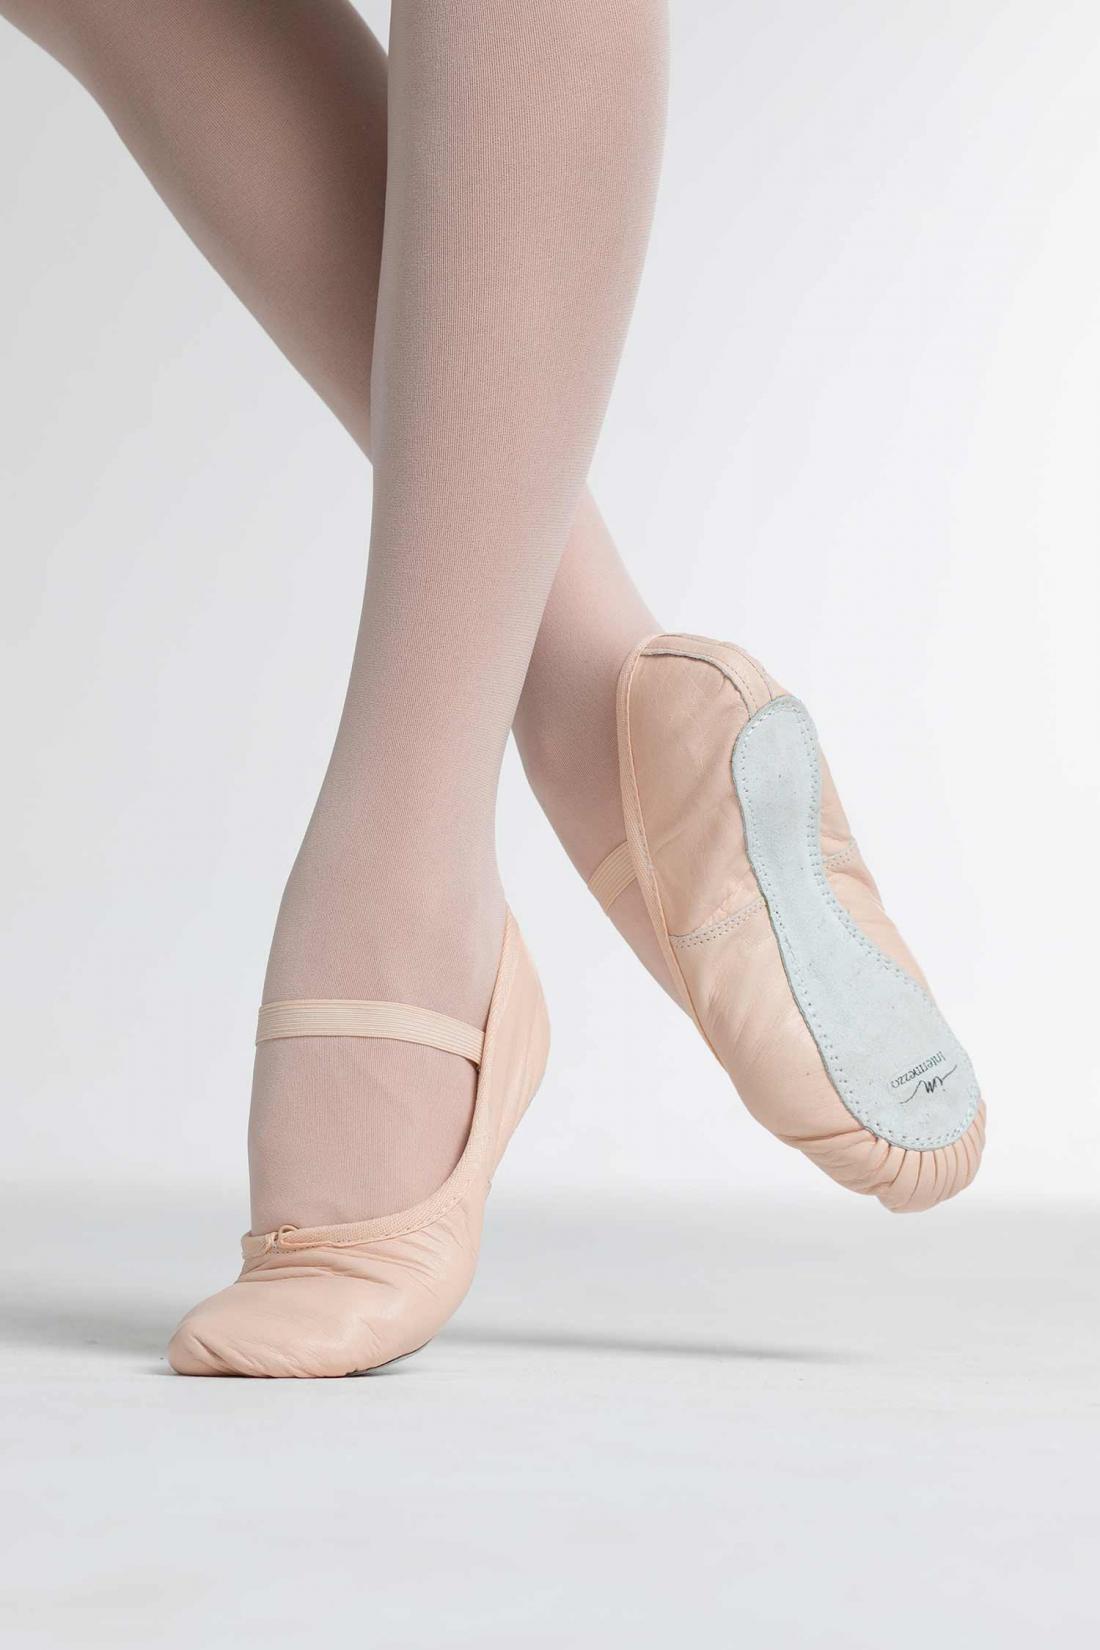 Ballet Flat Pink Leather Shoes for Girls Intermezzo Dancewear